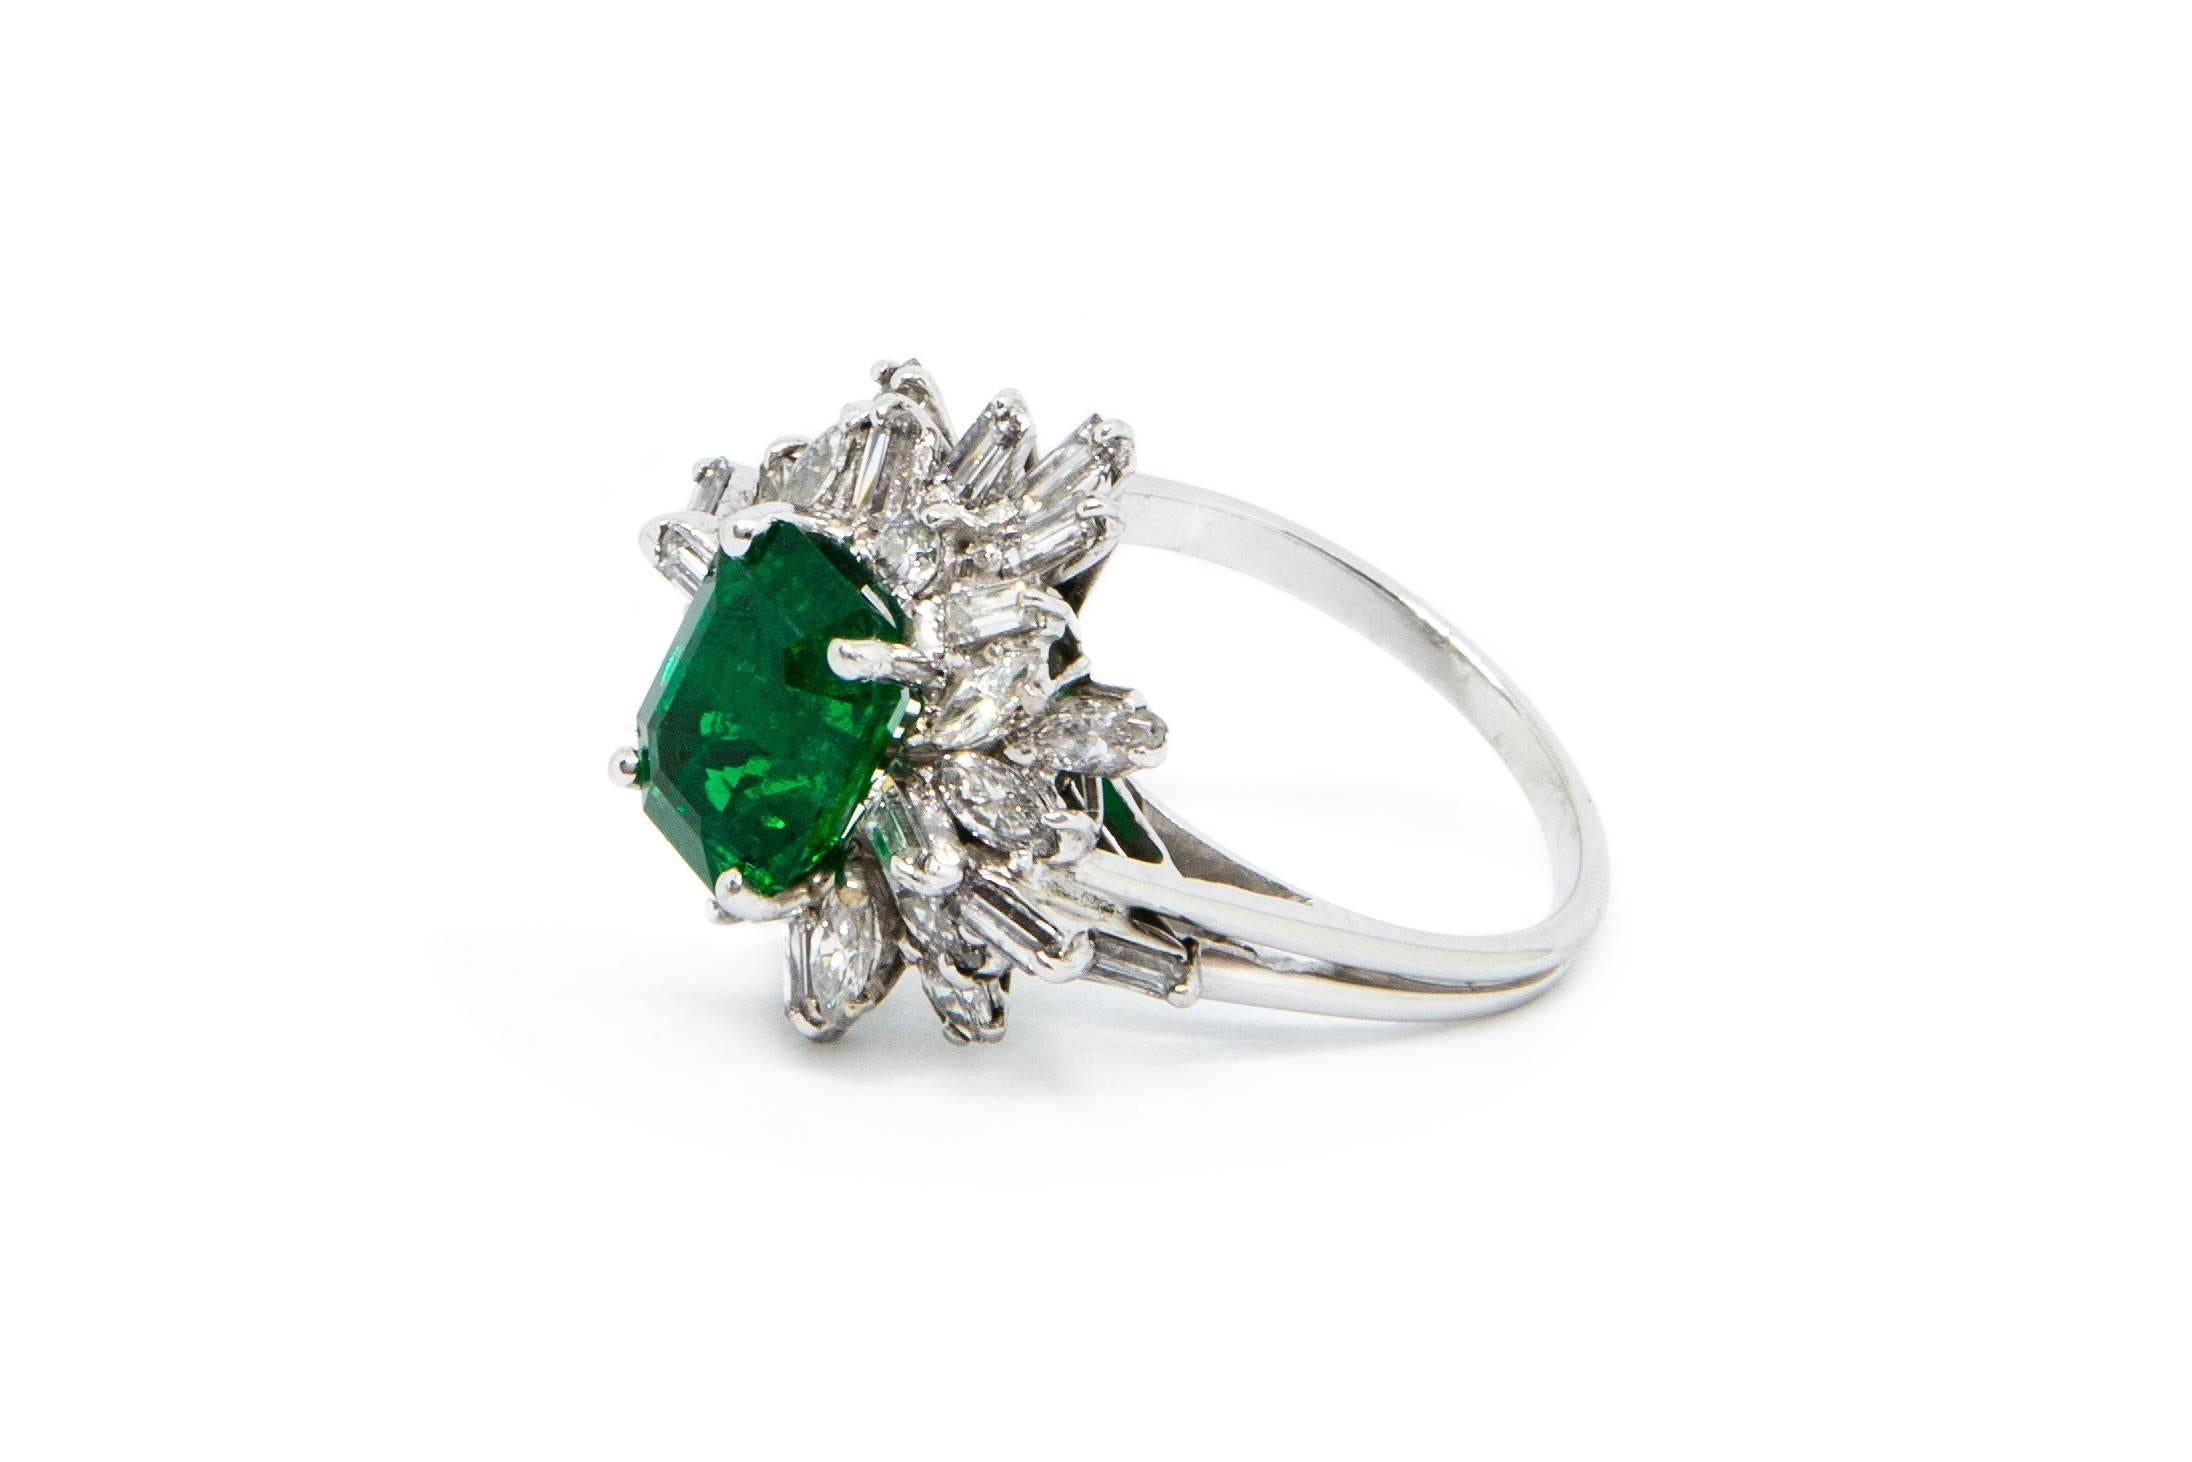 A certified Zambia Natural Emerald and diamond cluster ring set in 18ct white gold. (Emerald Report n. 13213)
 
Emerald measurement: 9.1 x 7.0 x 5.0mm
16 rectangular, step cut diamonds
12 marquise shaped diamonds
2 round brilliant cut diamonds
